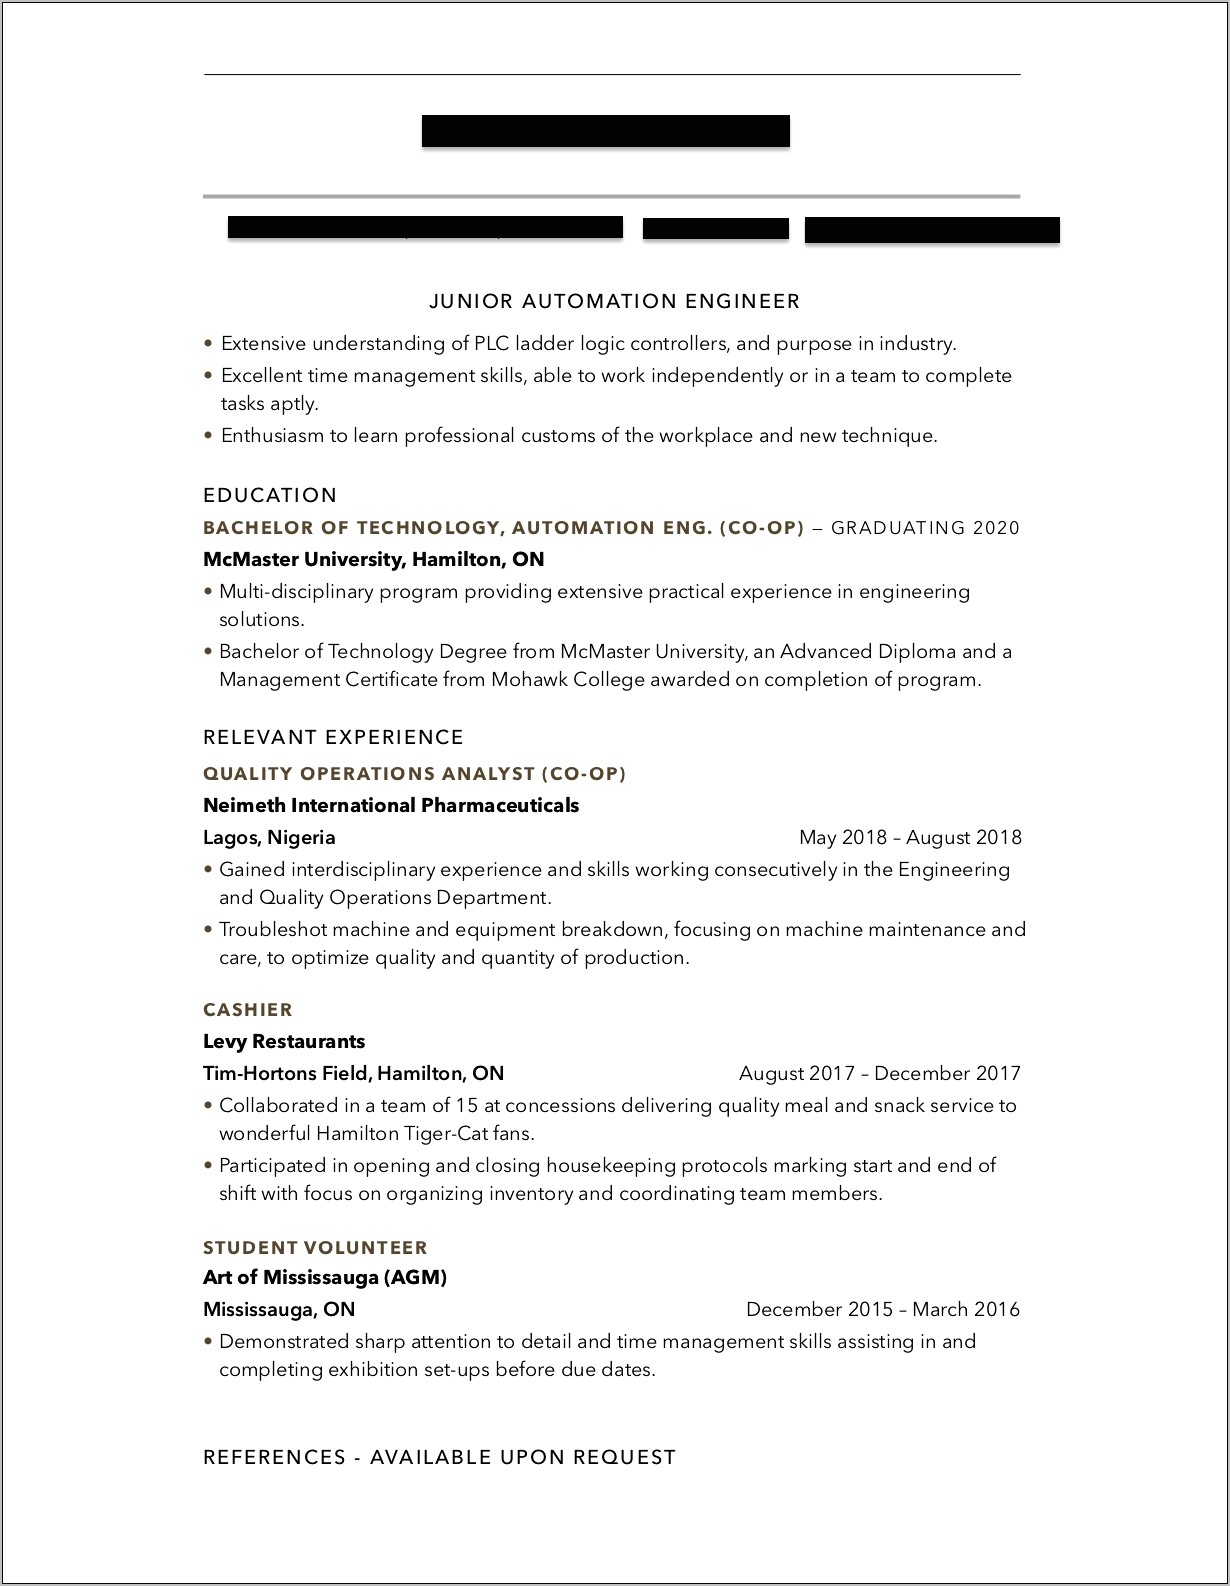 Resume No Relevant Work Experience Reddit